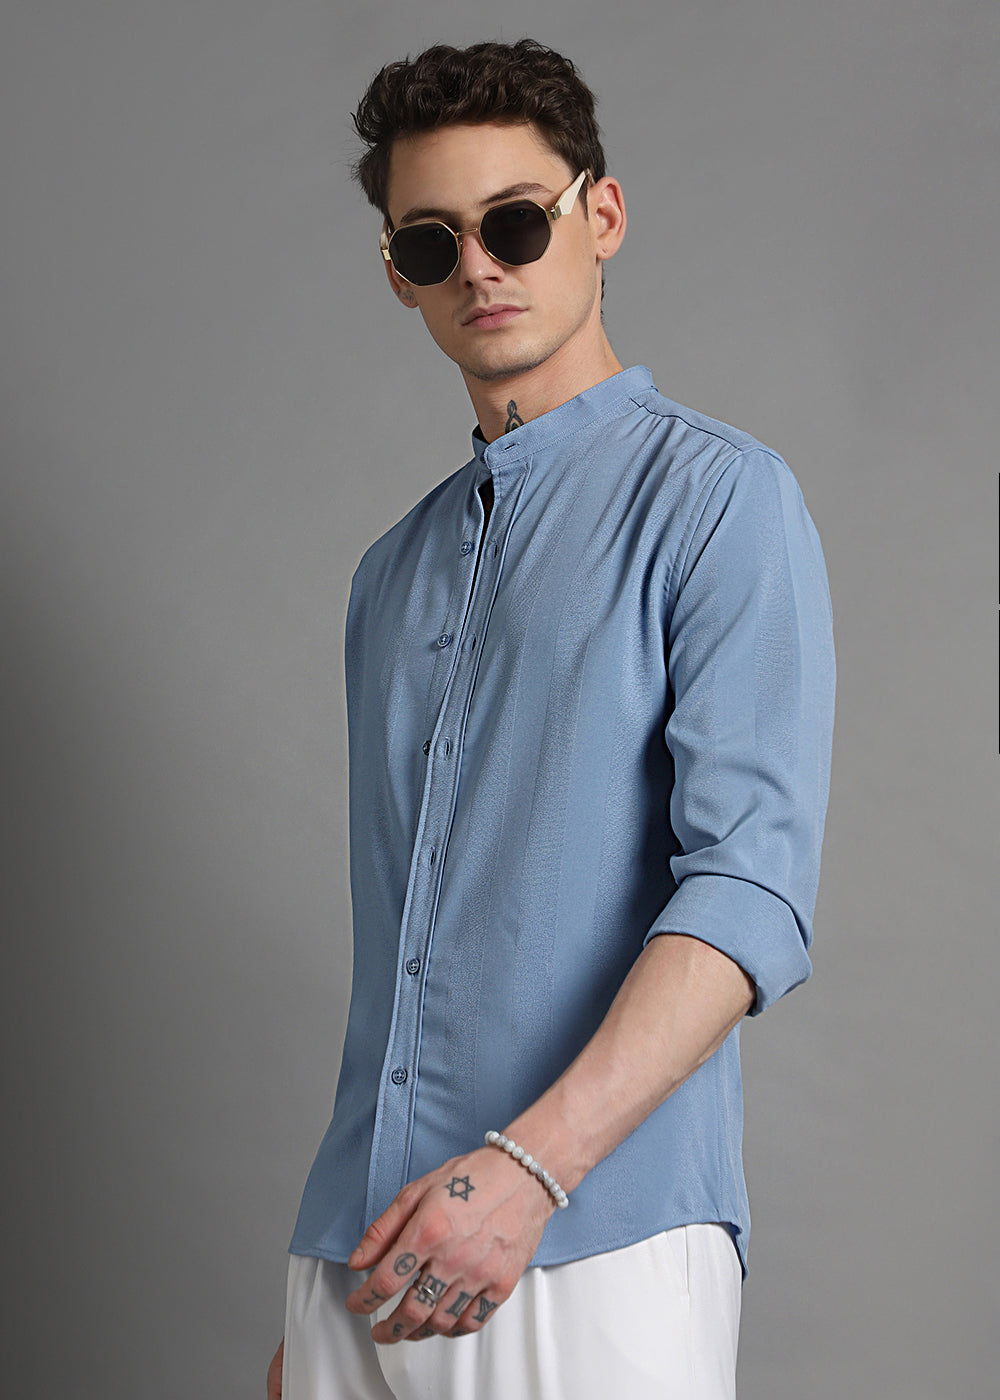 Aqua Blue Shein Patterned Shirt